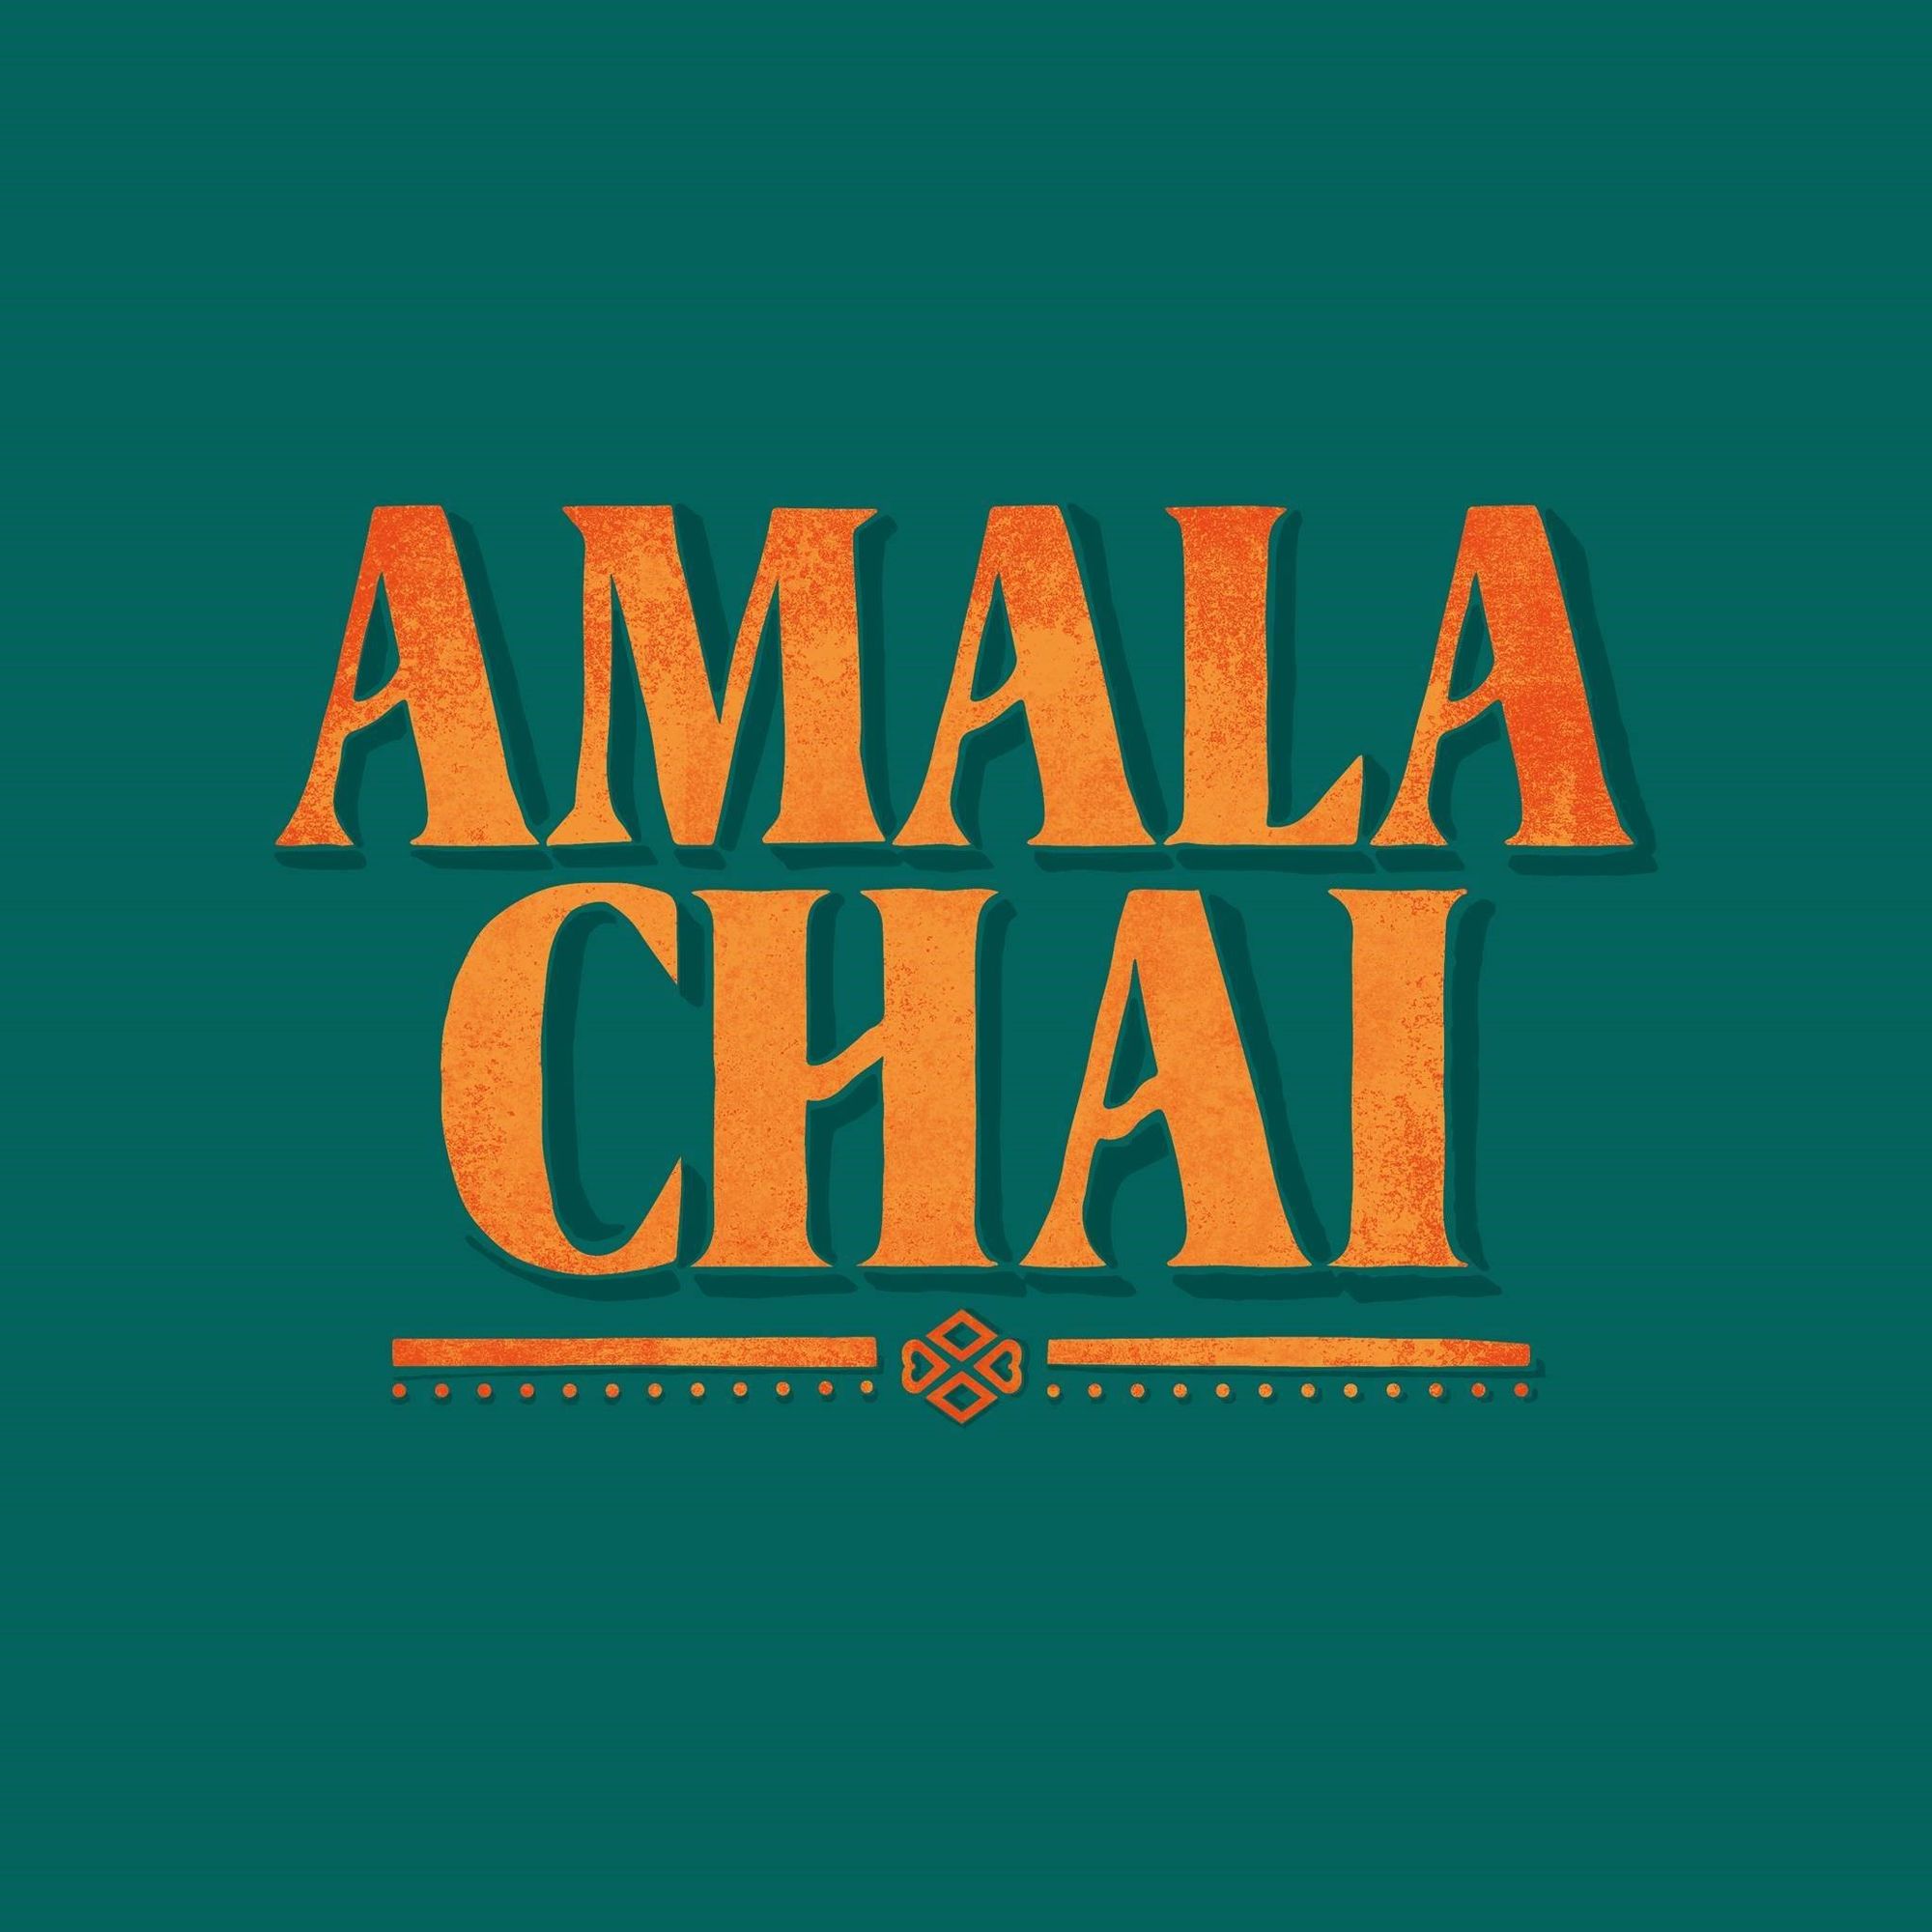 Authentic Masala Chai - Amala Chai